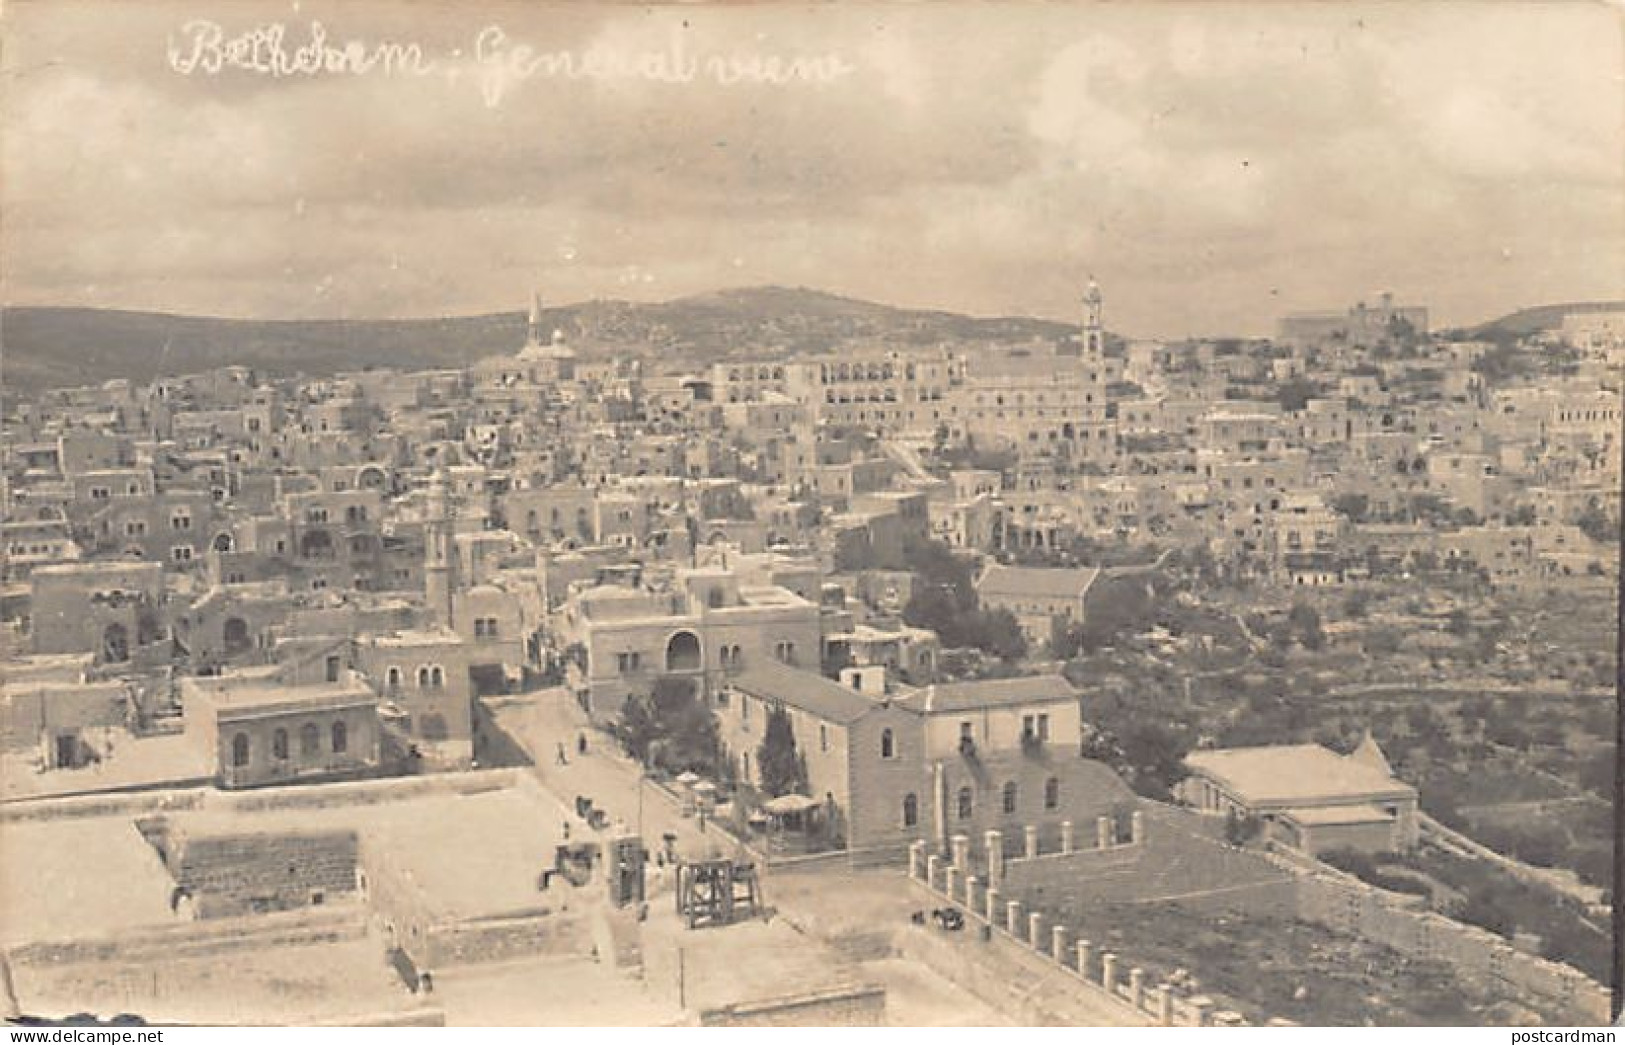 Palestine - BETHLEHEM - General view - REAL PHOTO - Publ. unknwon 